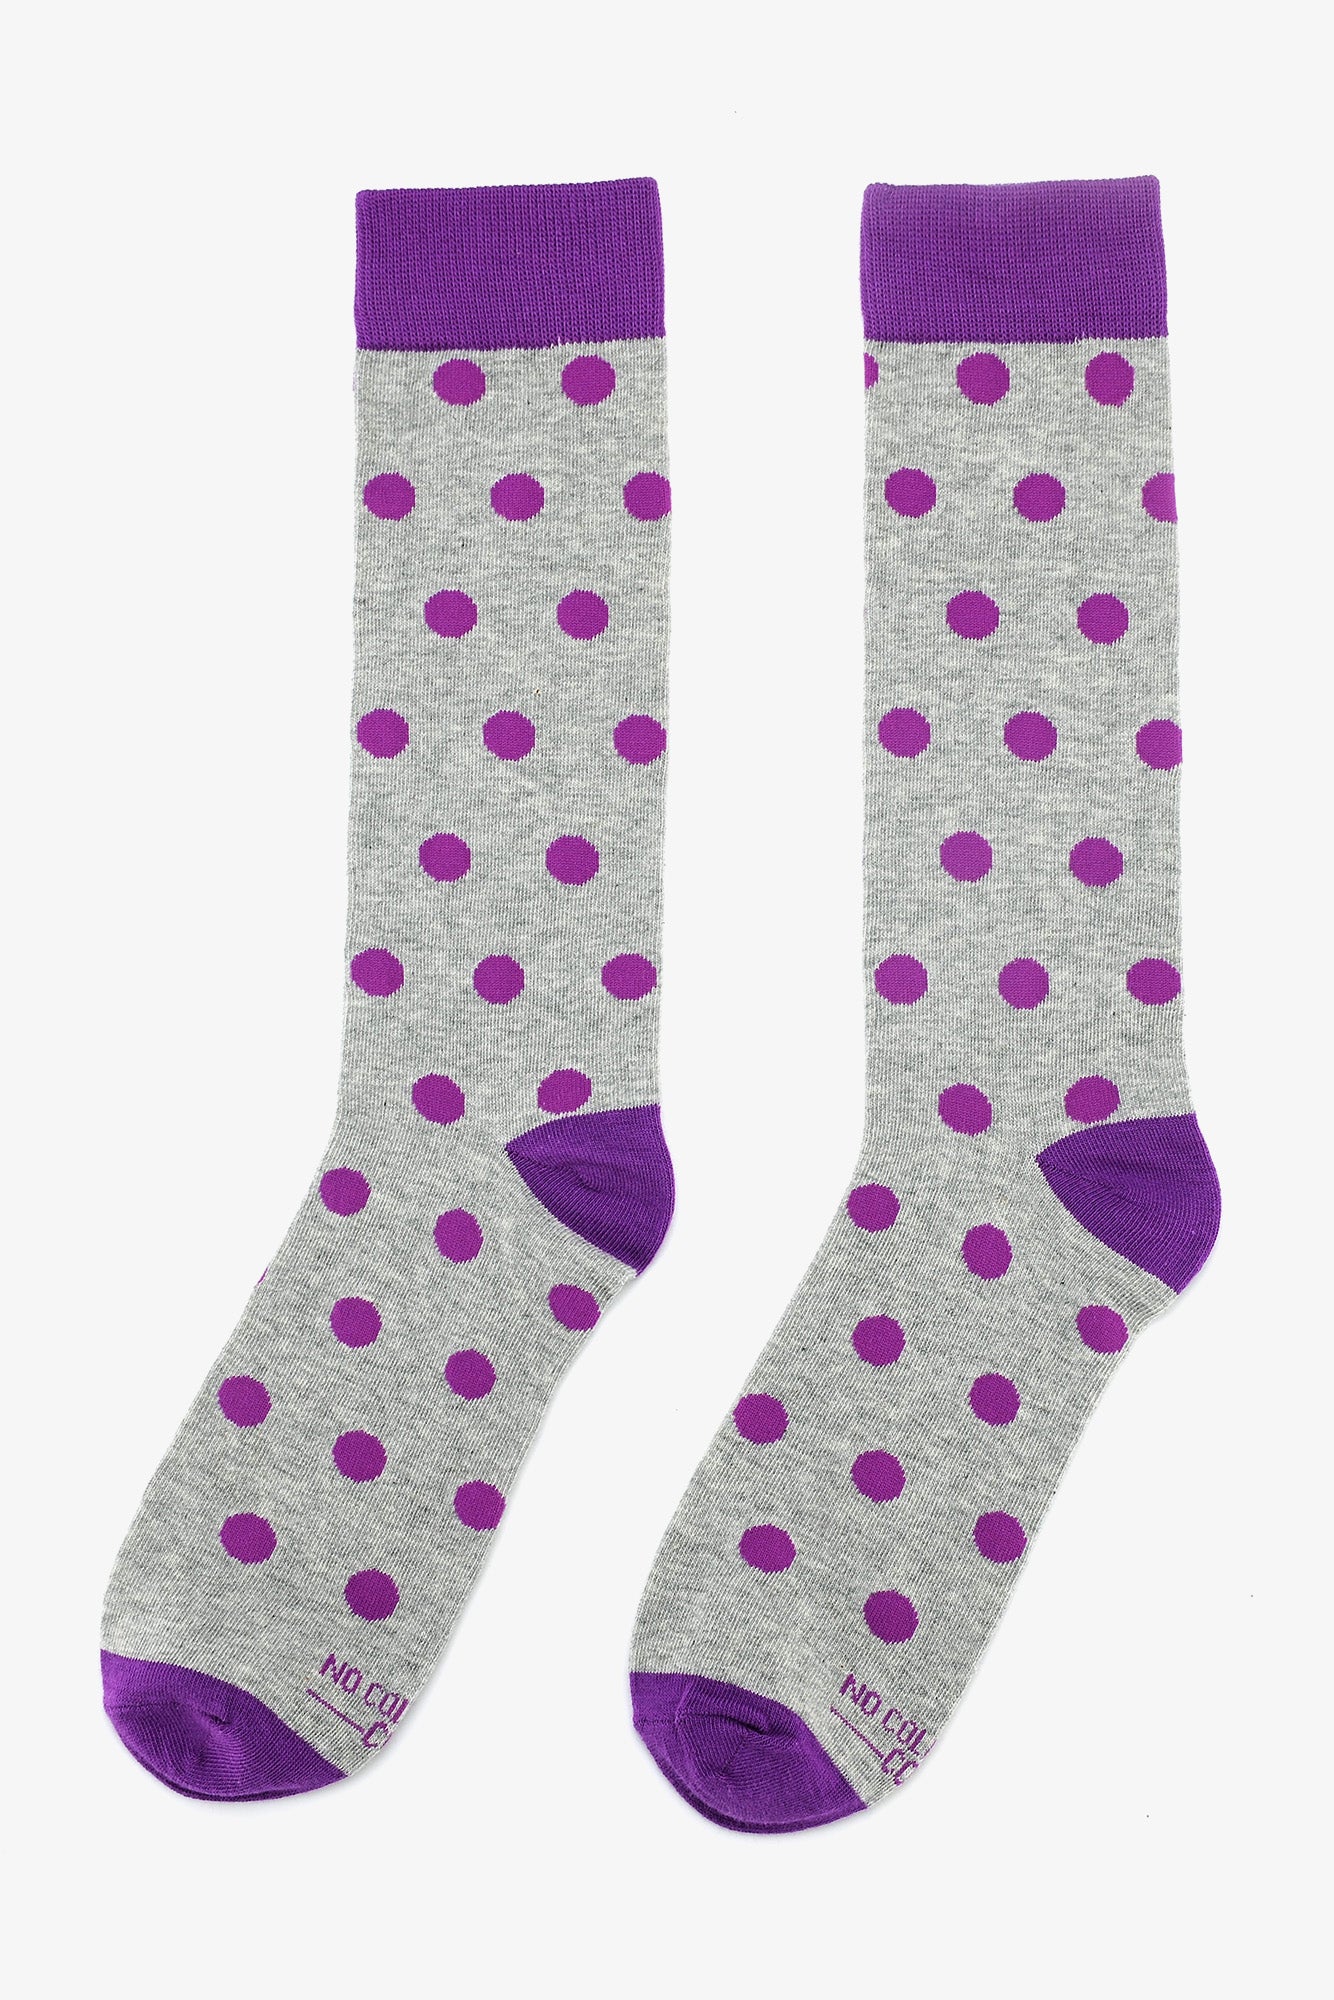 Polka Dot Groomsmen Socks By No Cold Feet - Purple